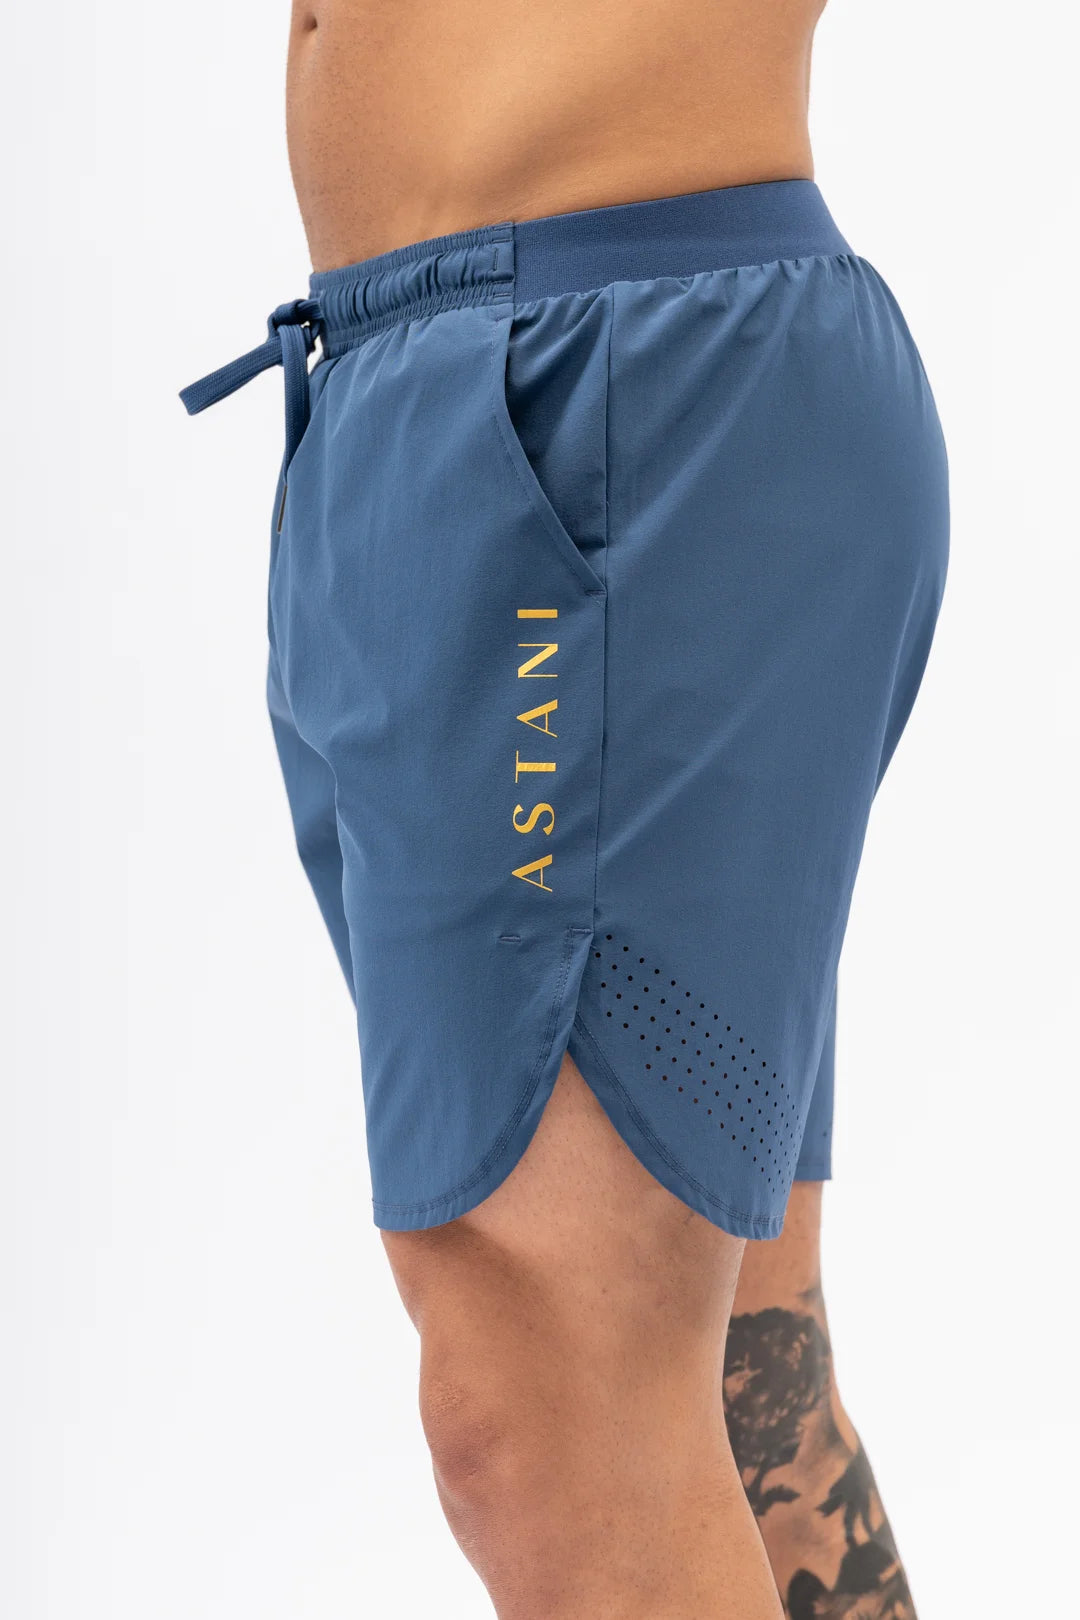 A VELOCE Shorts  - Azul